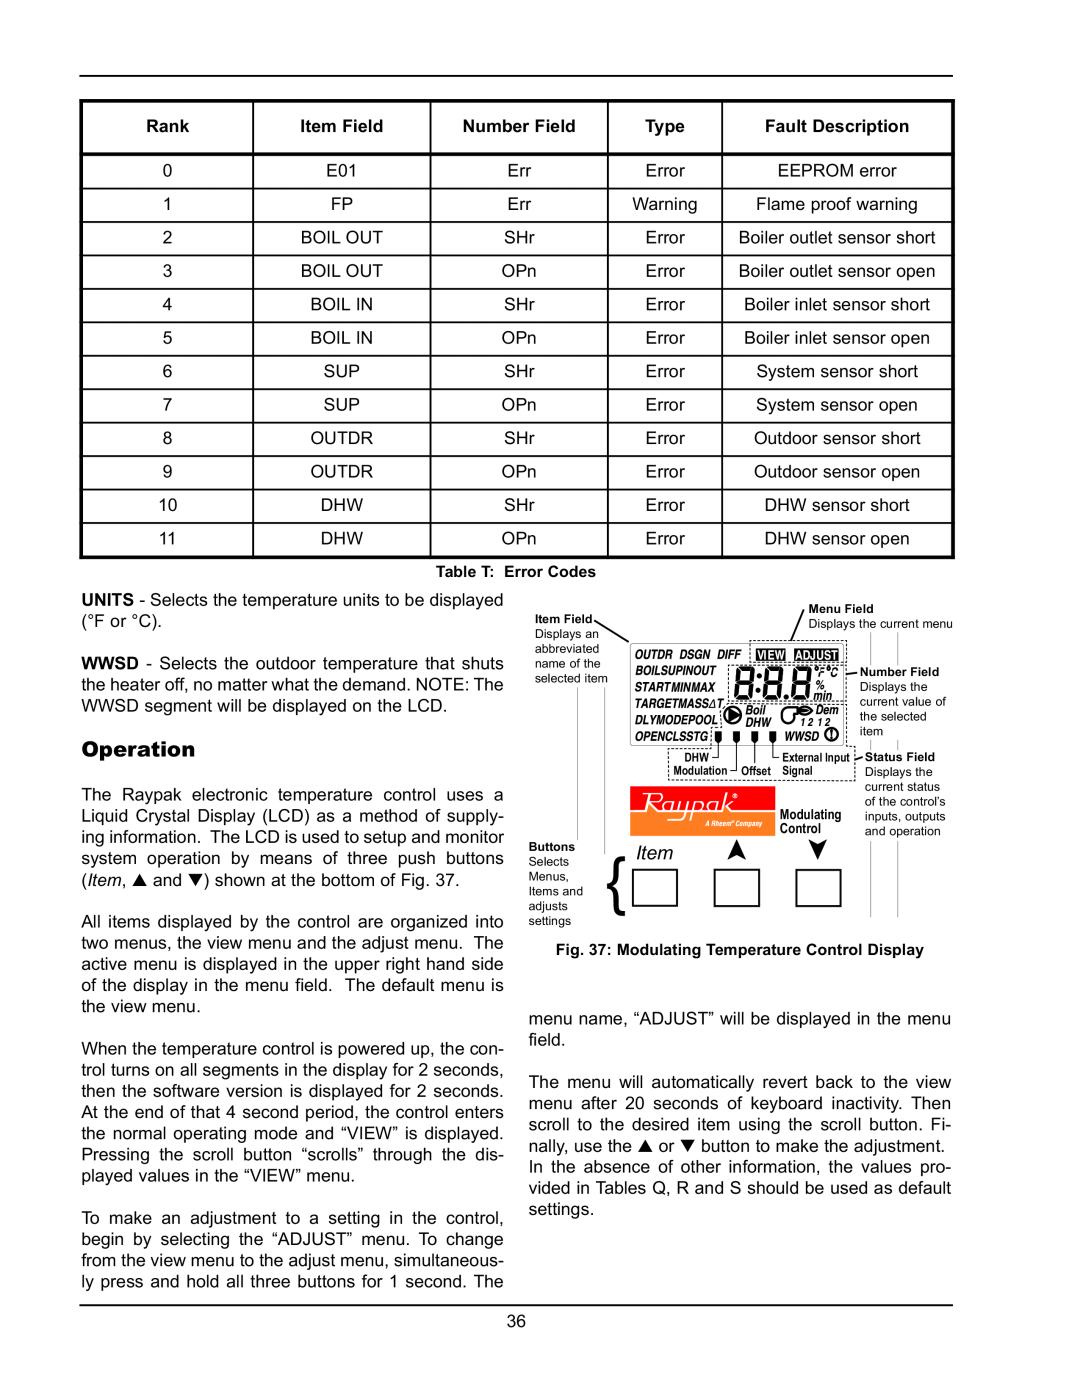 Raypak 5042004 operating instructions Item, Rank, Number Field, Type, Fault Description 